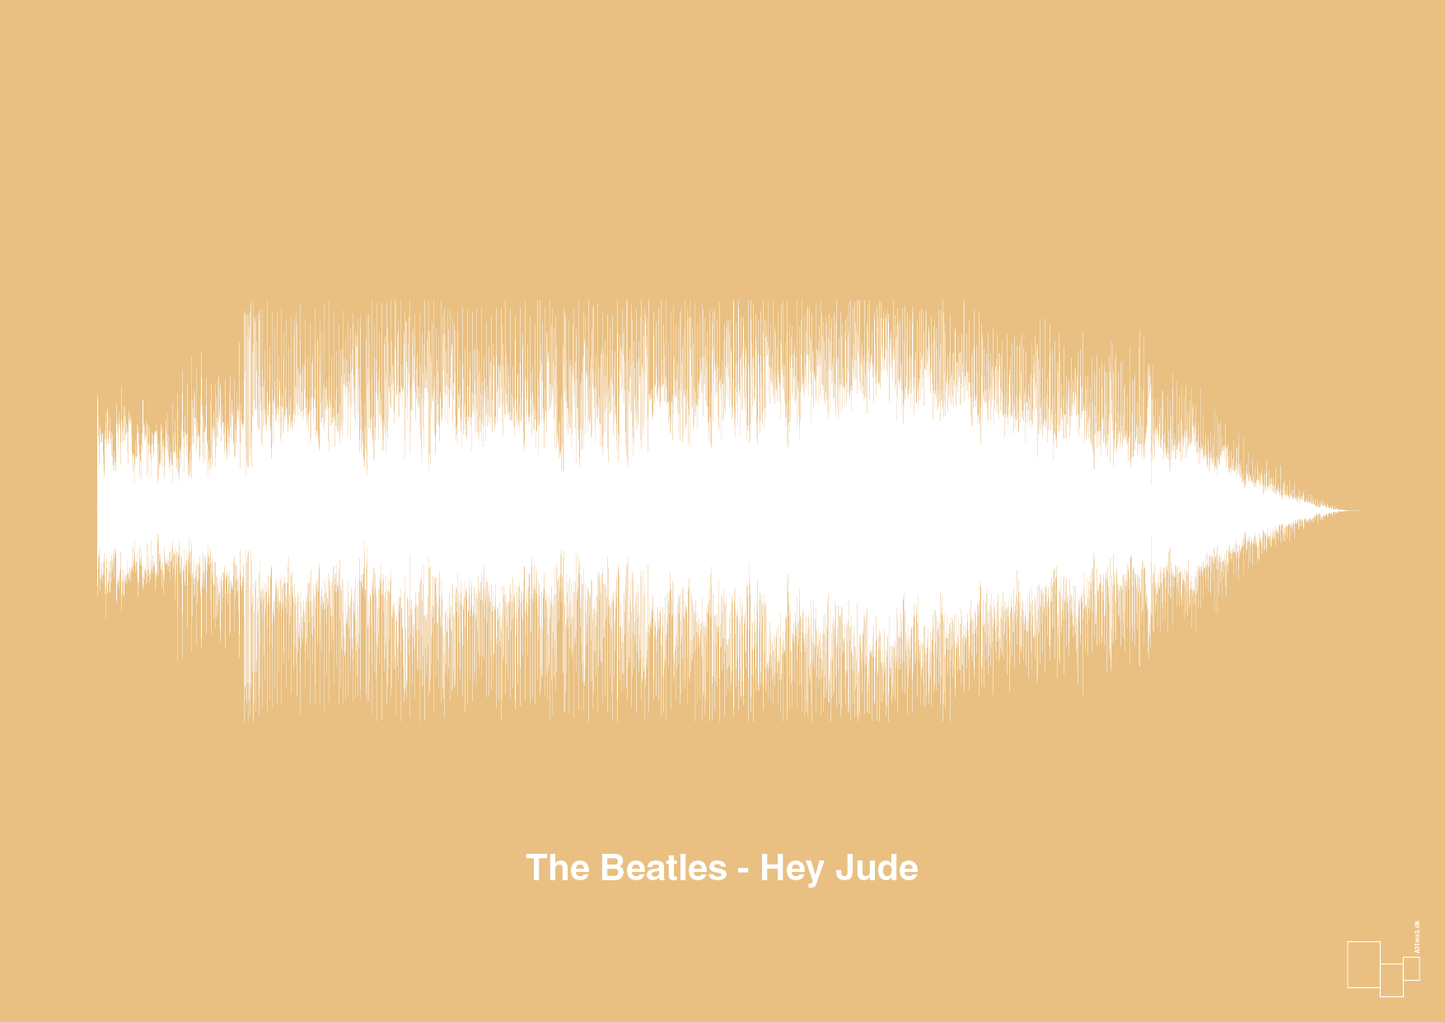 the beatles - hey jude - Plakat med Musik i Charismatic